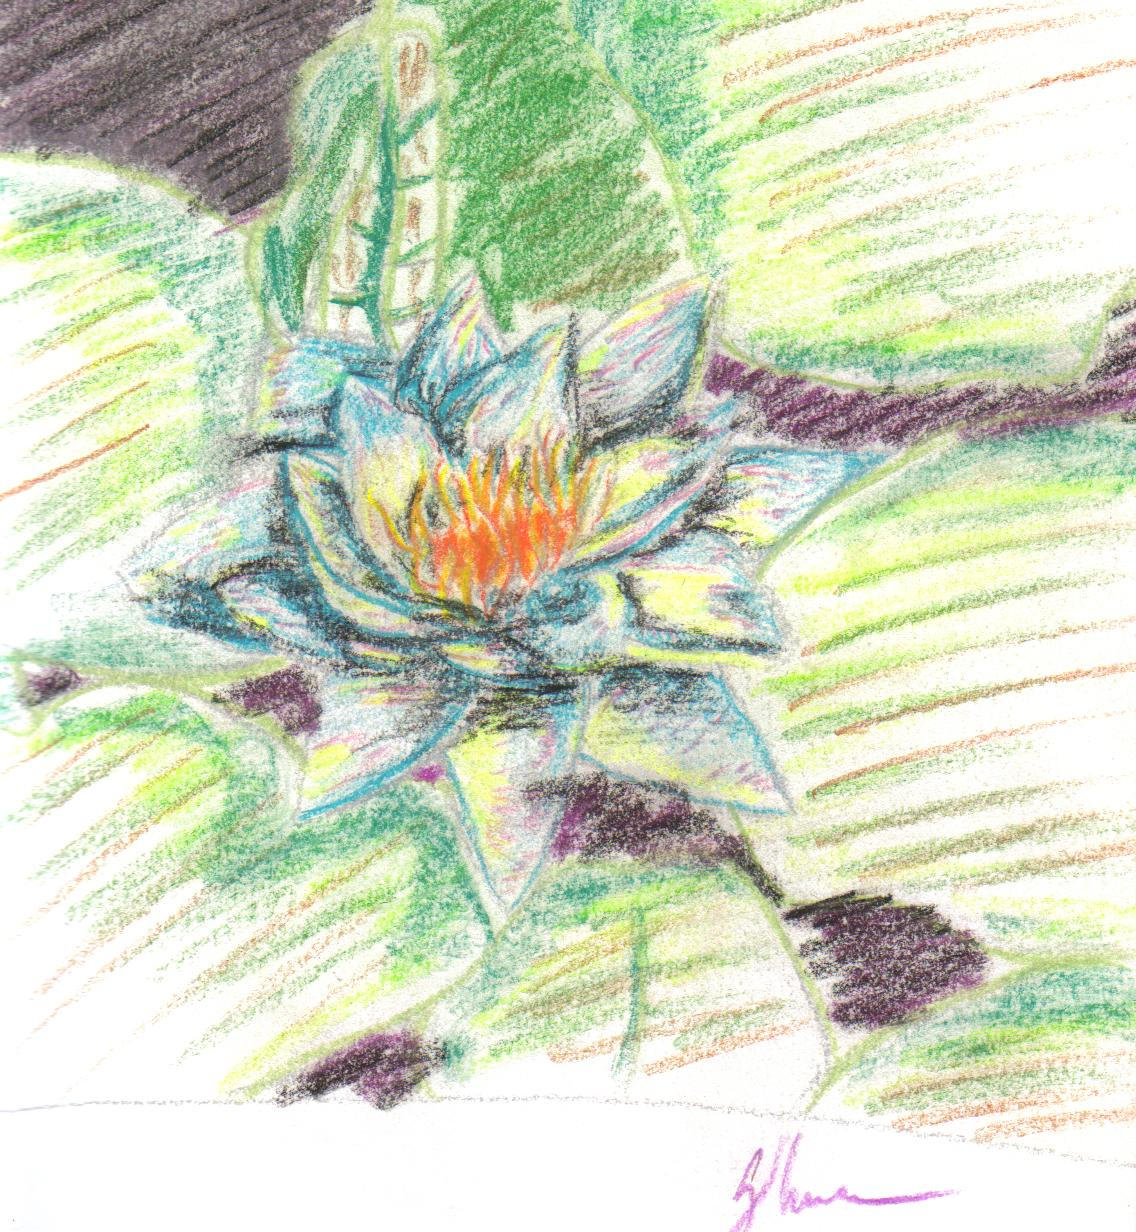 Lily flower by chotakana on